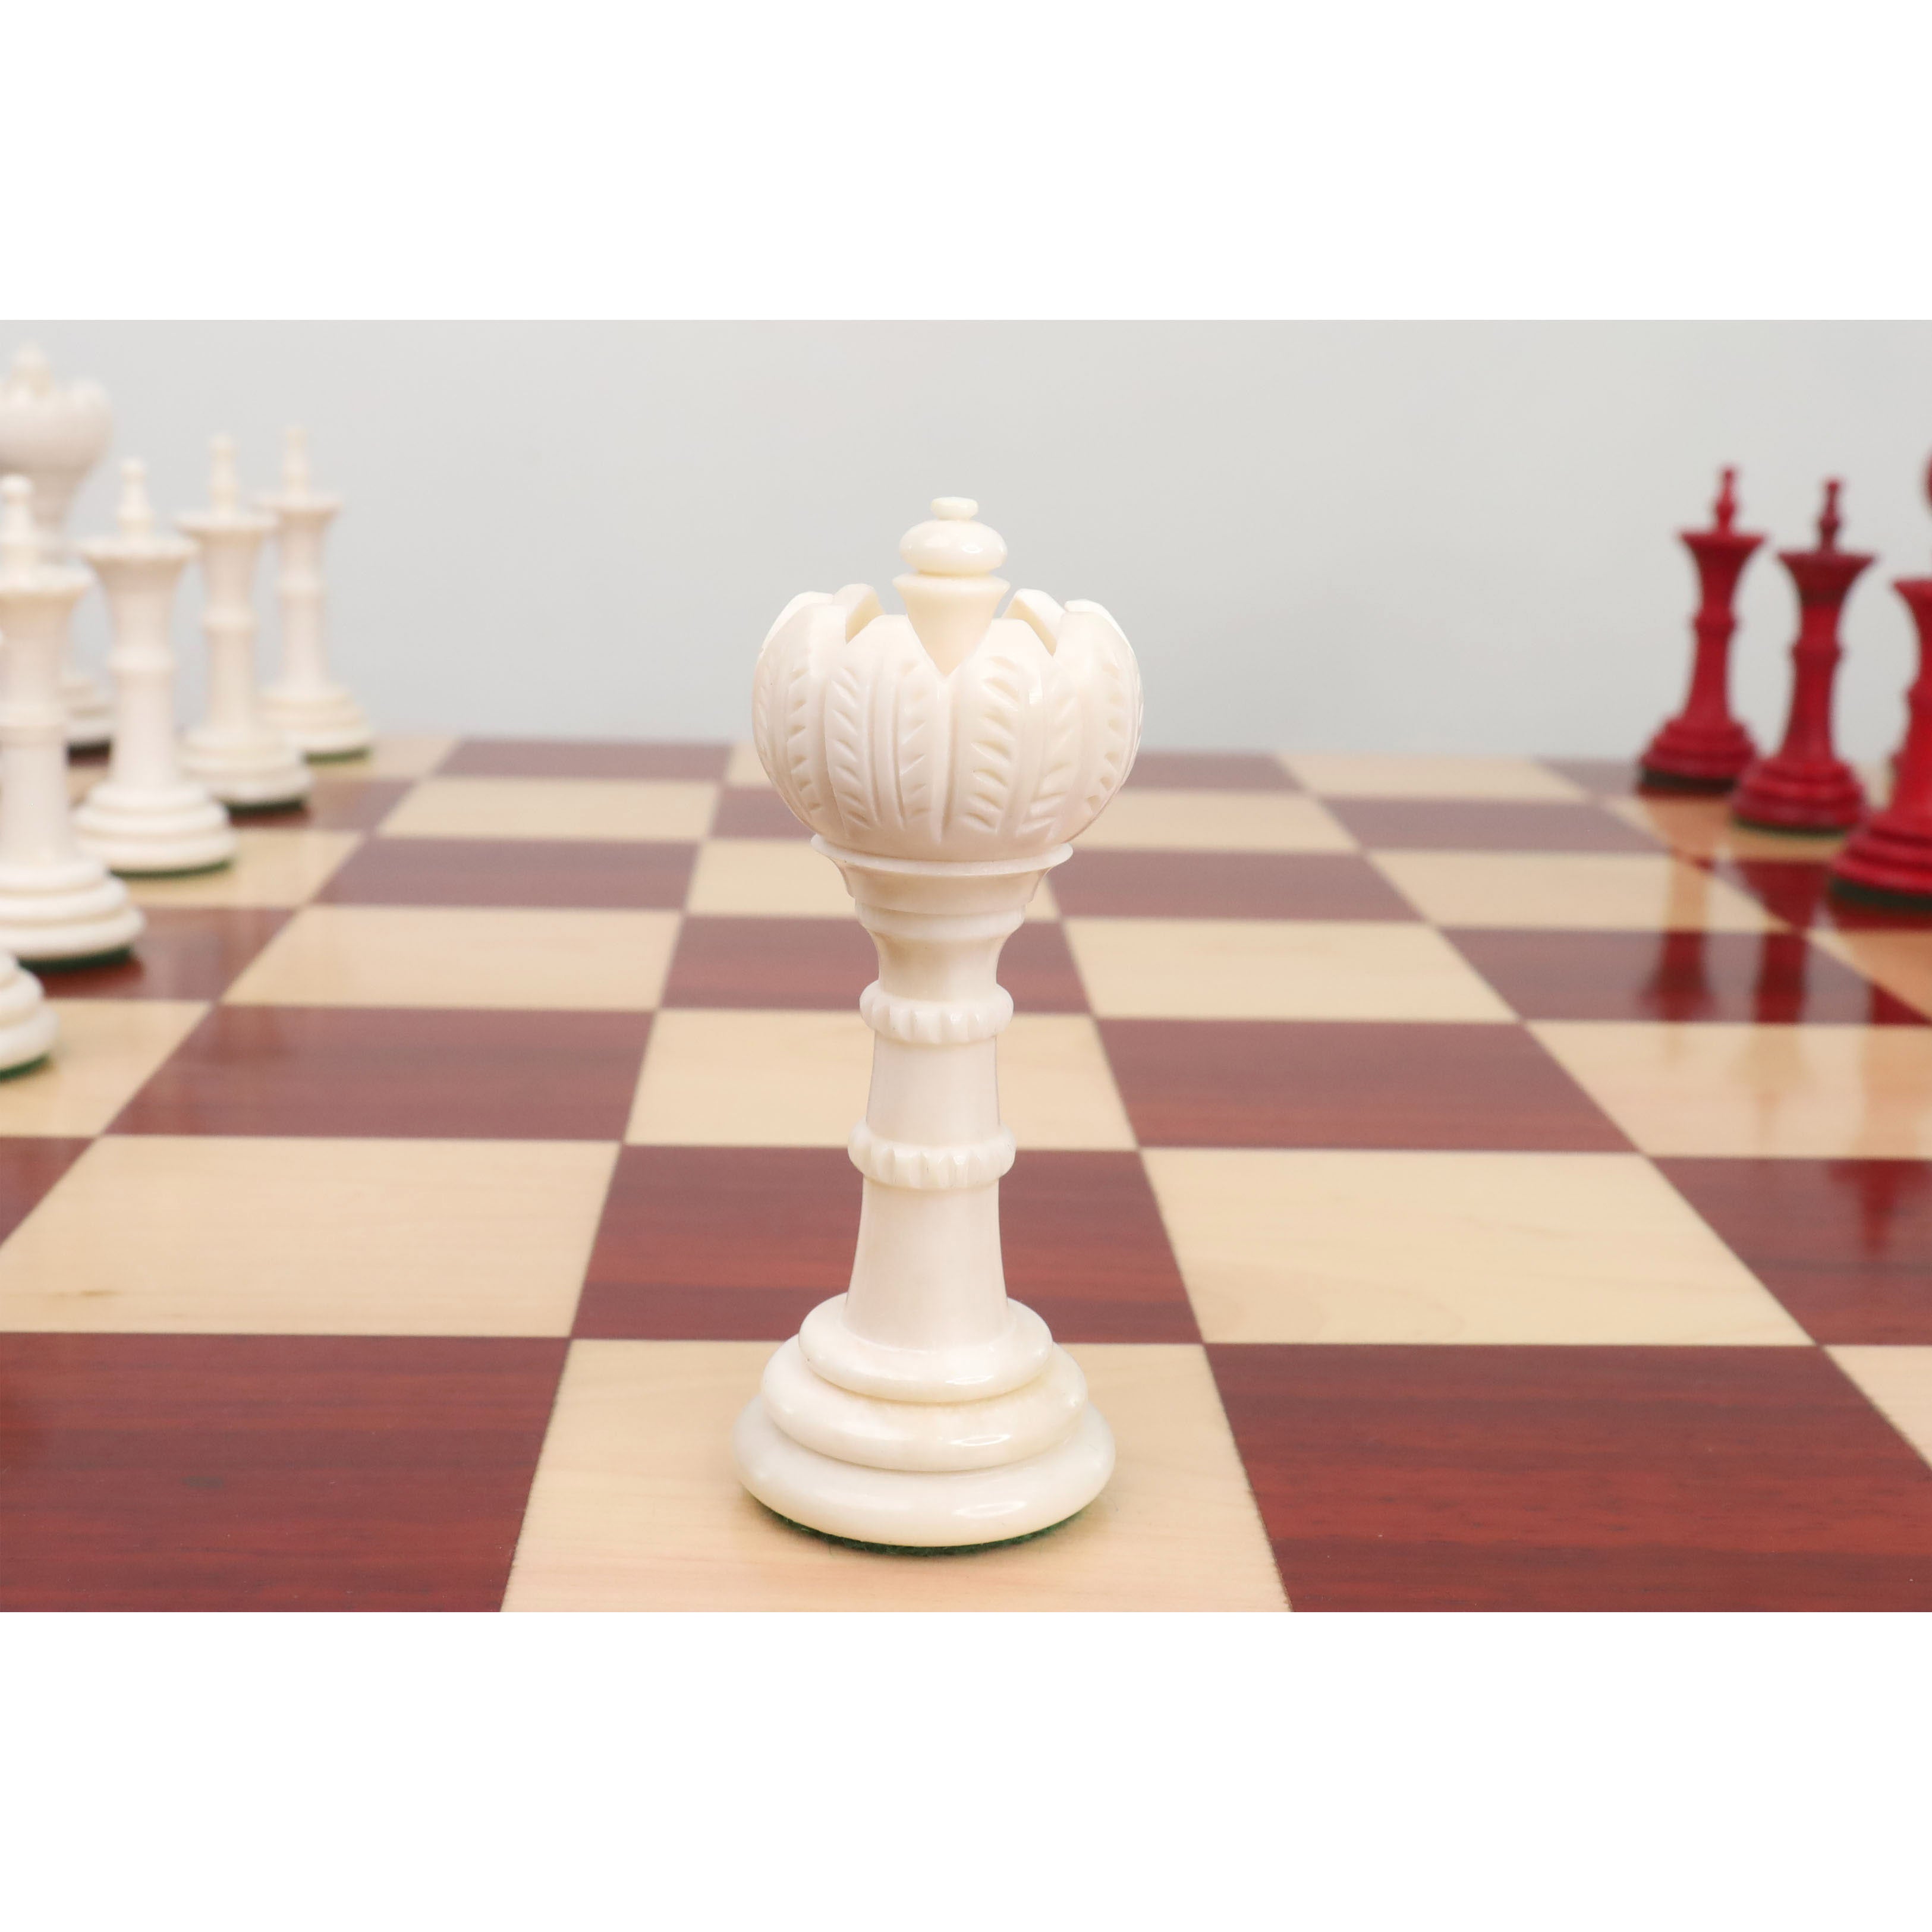 4.6″ Turkish Tower Pre-Staunton Chess Set- Chess Pieces Only-Crimson & White Camel Bone